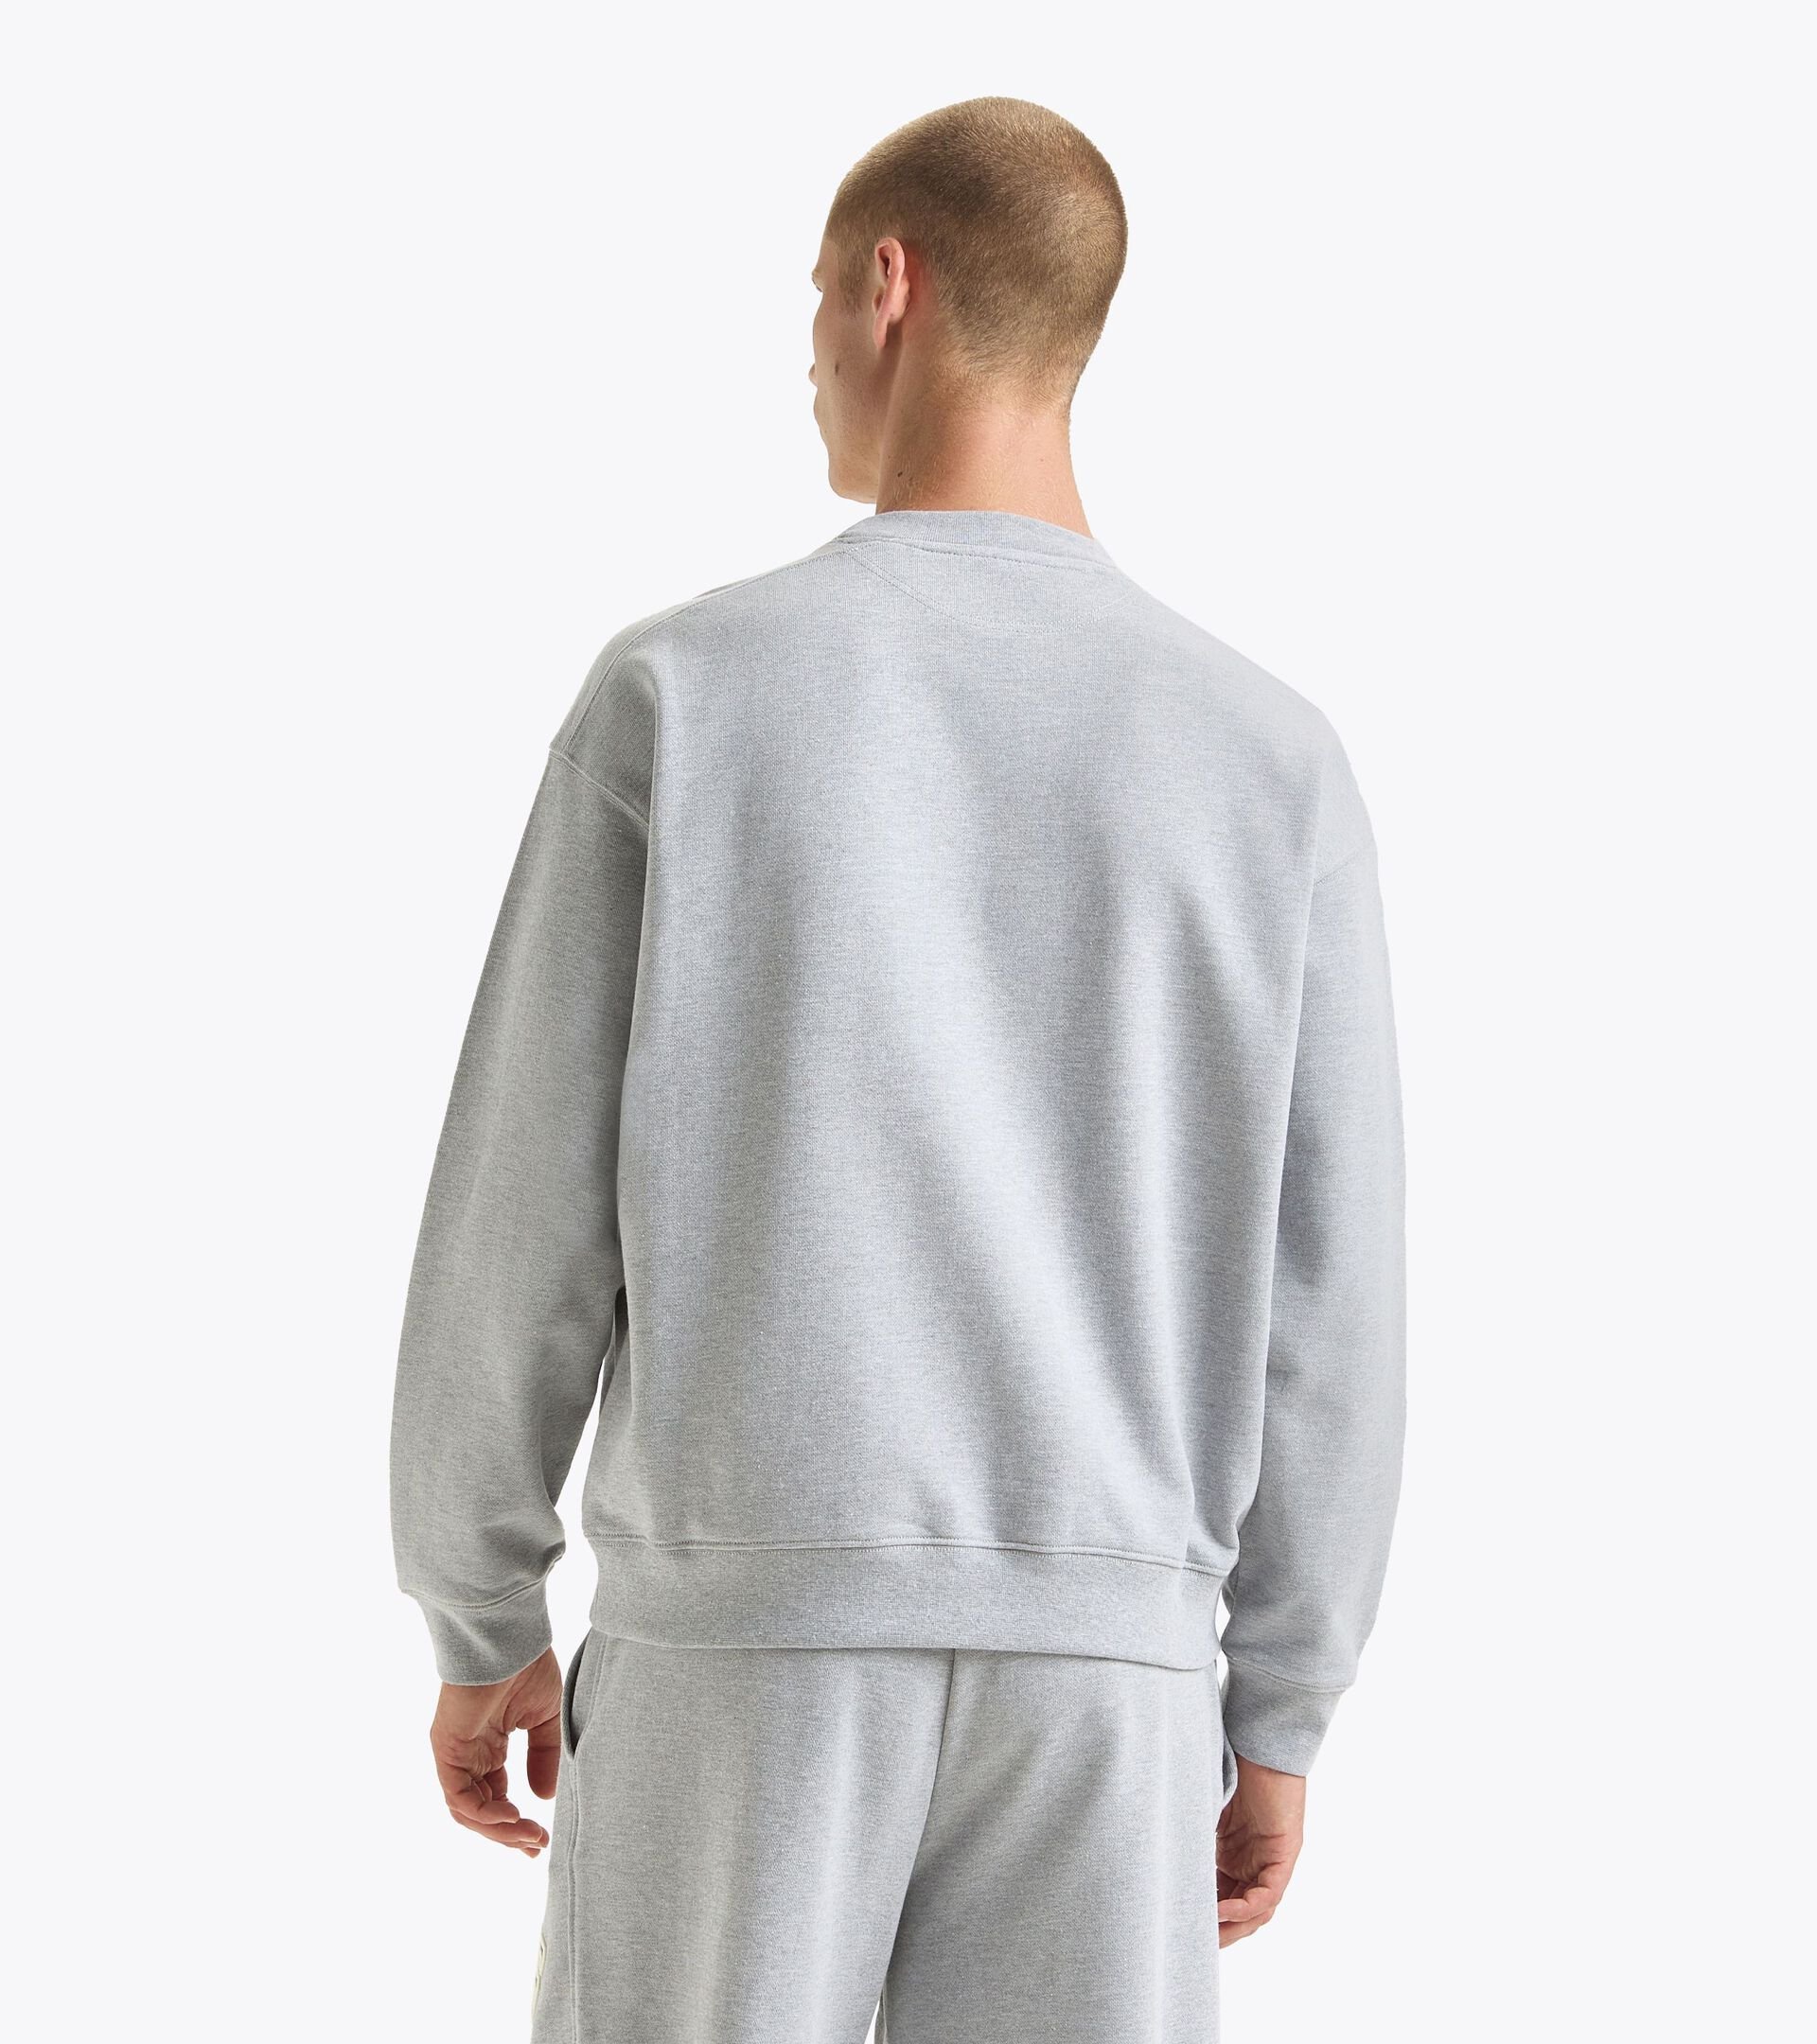 Crewneck sweatshirt - Made in italy - Gender Neutral SWEATSHIRT CREW LEGACY HIGH RISE MELANGE - Diadora